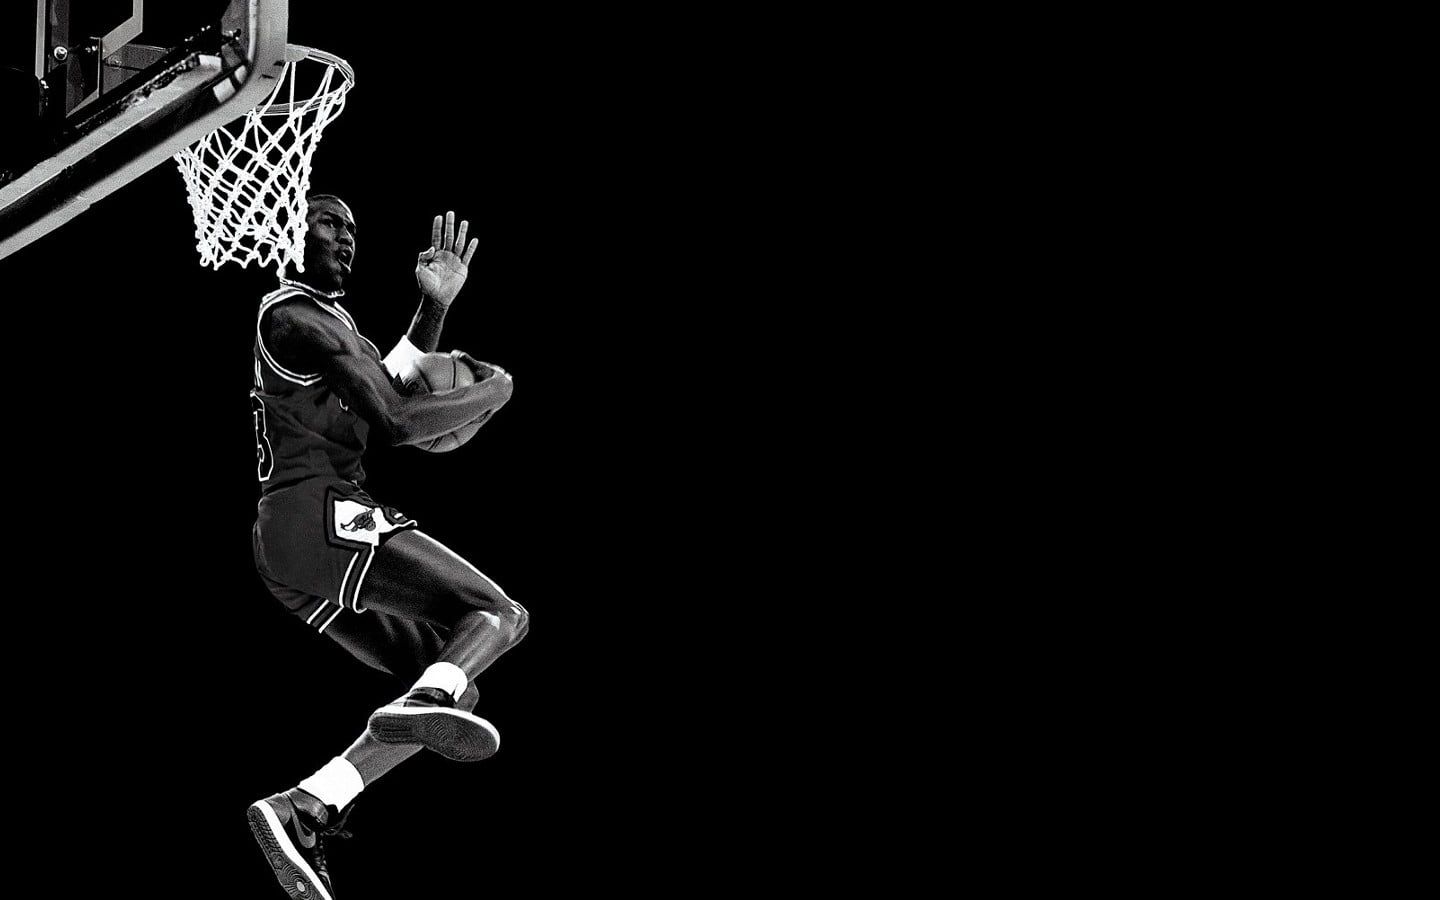 Jordan Dunking, Black and White, 1985, The Dunk, Chicago Bulls, Nike, NBA, Sports, Basketball, wallpaper, background, image, photo - Michael Jordan